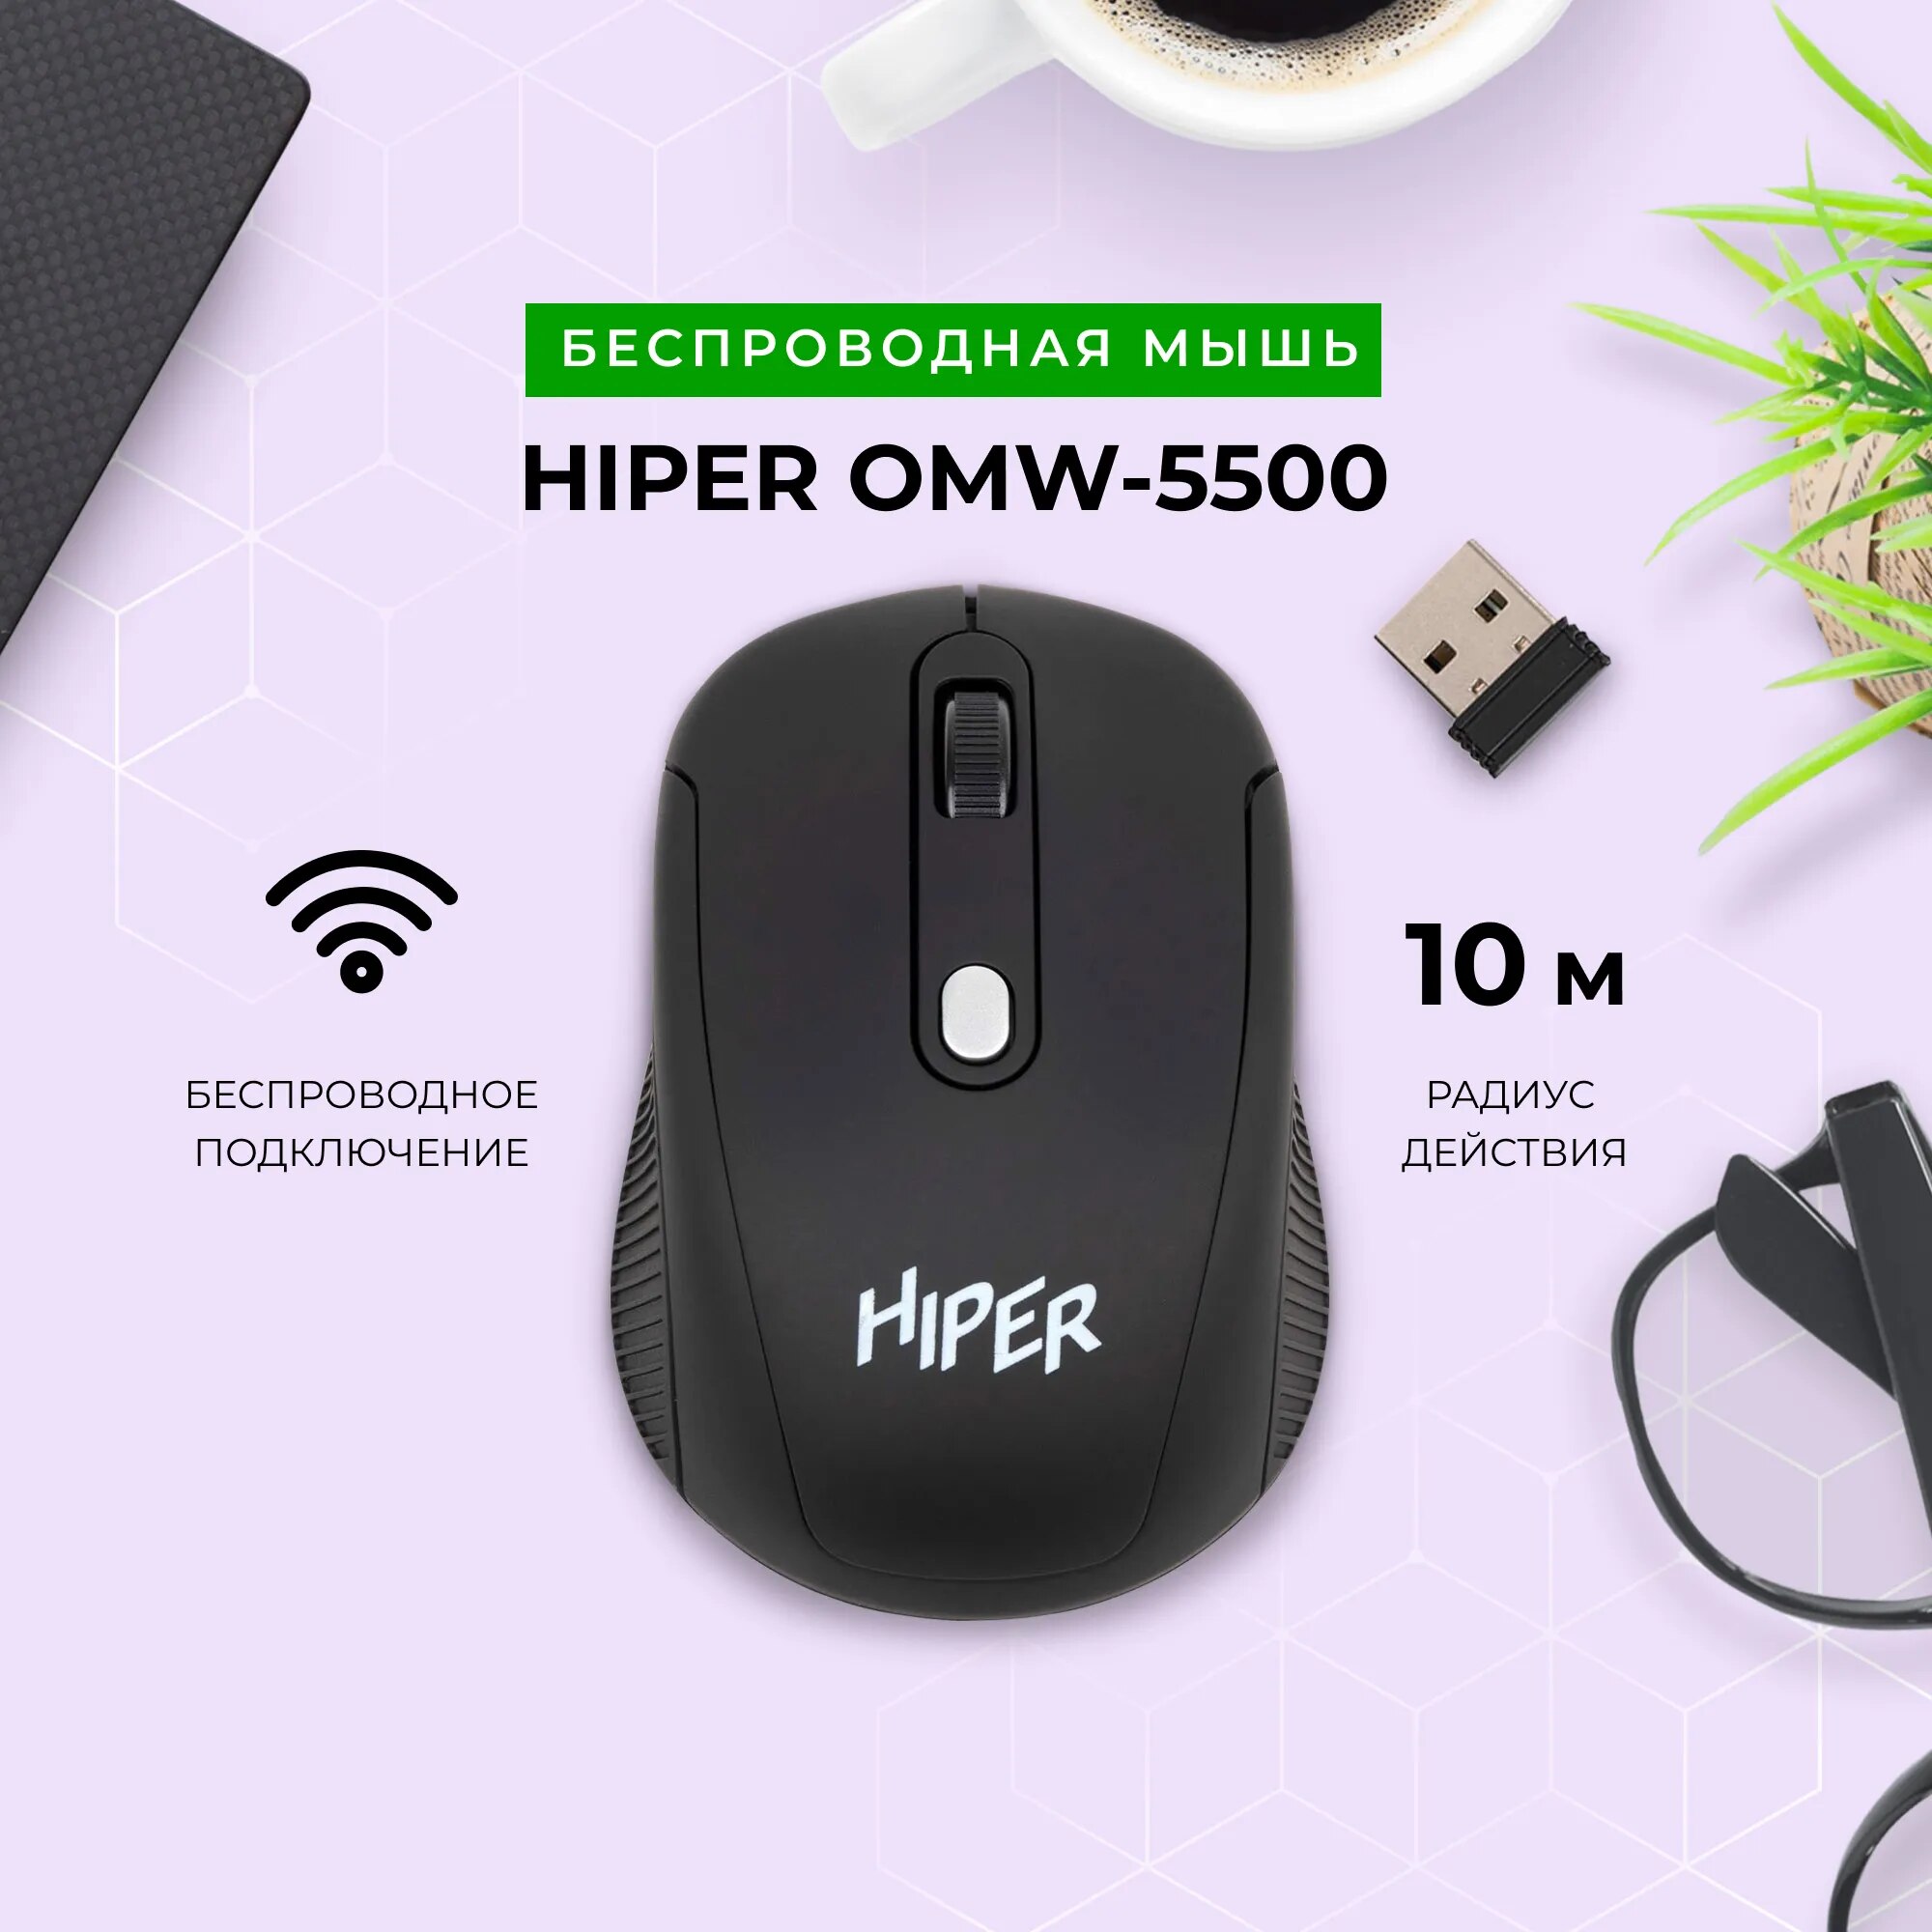 Беспроводная мышь HIPER OMW-5500 черная